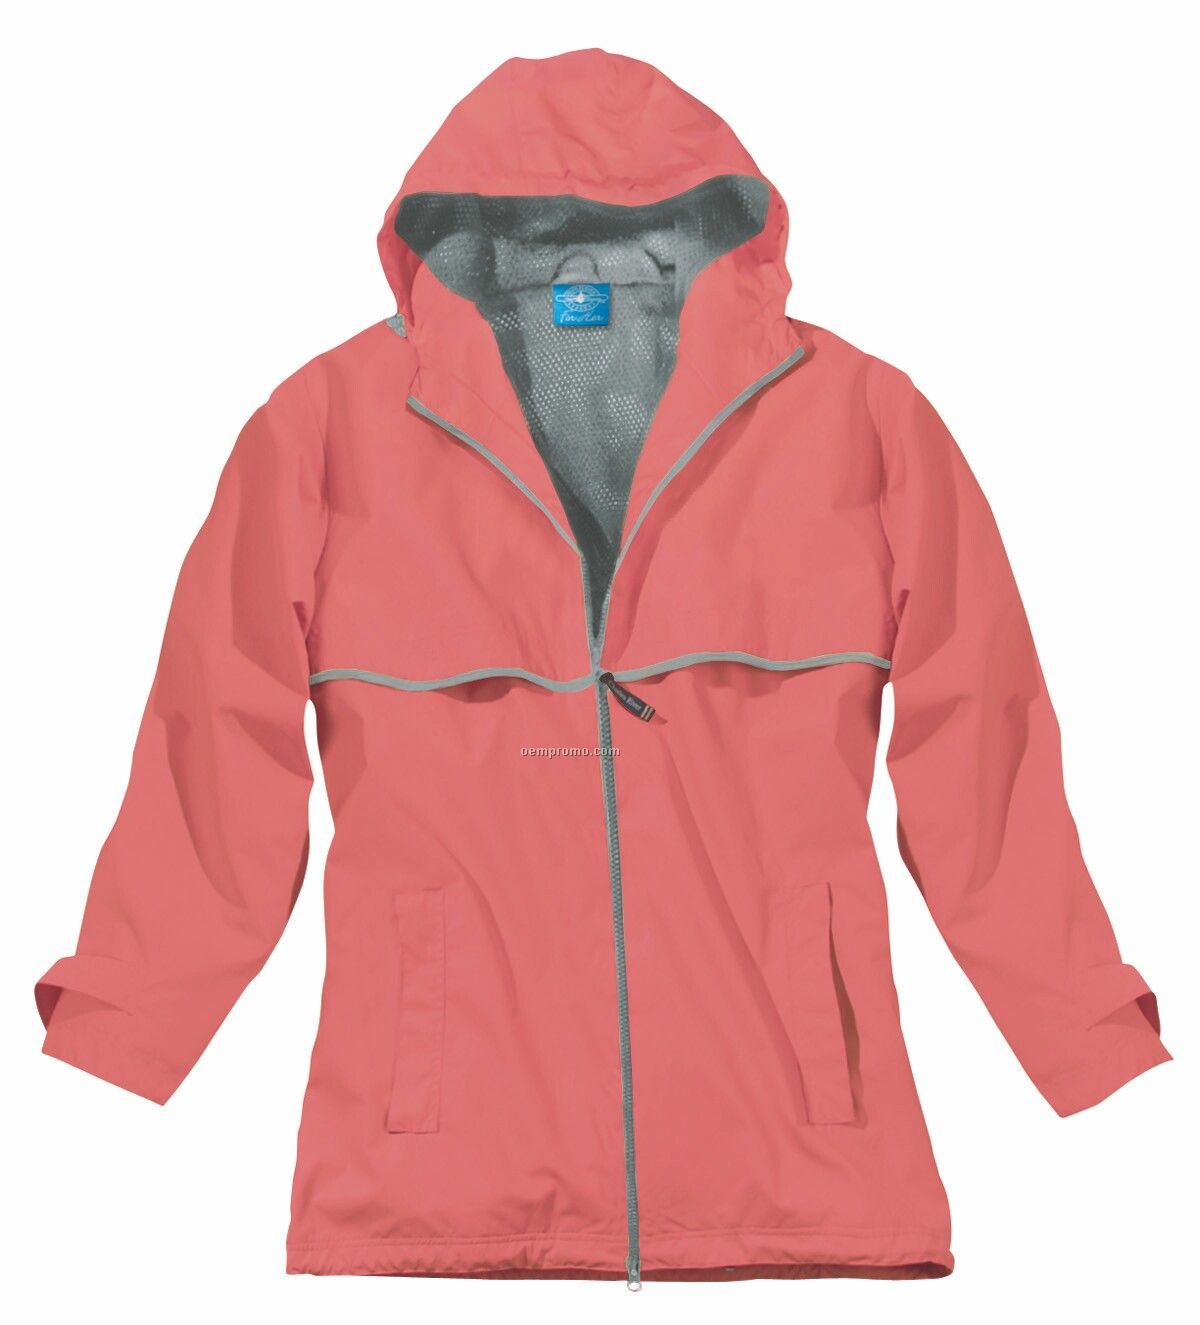 Women's New Englander Rain Jacket